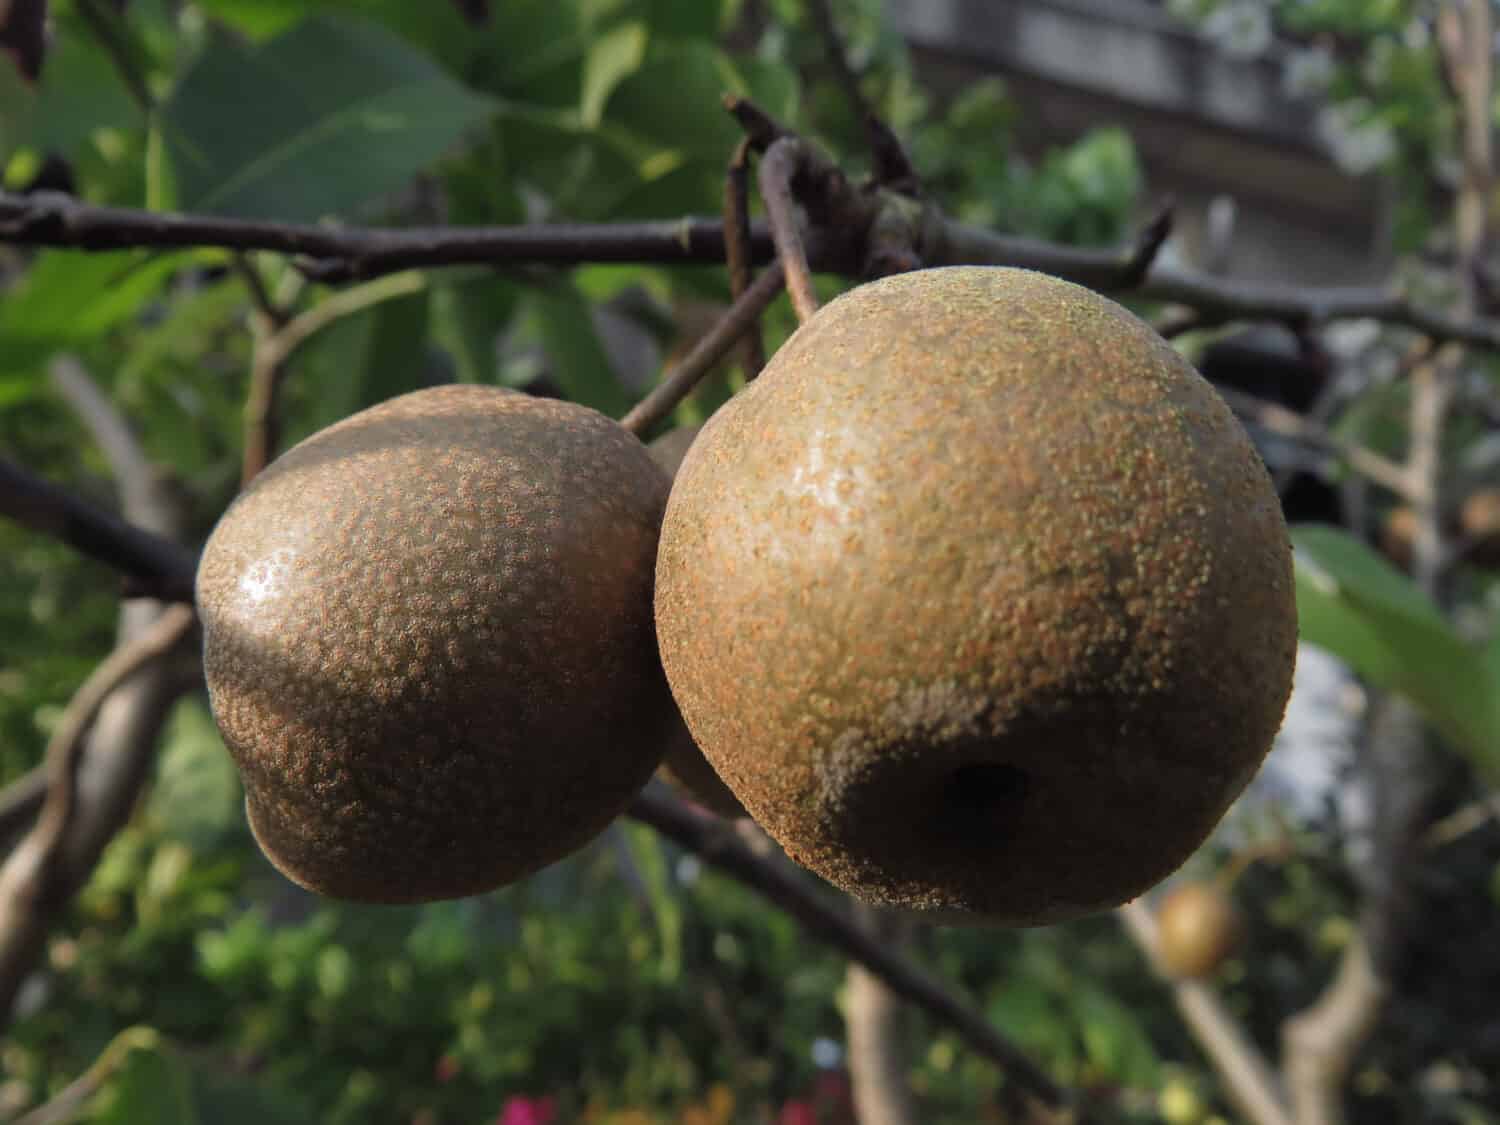 A selective focus closeup of a winter nelis pear in a tree in the garden